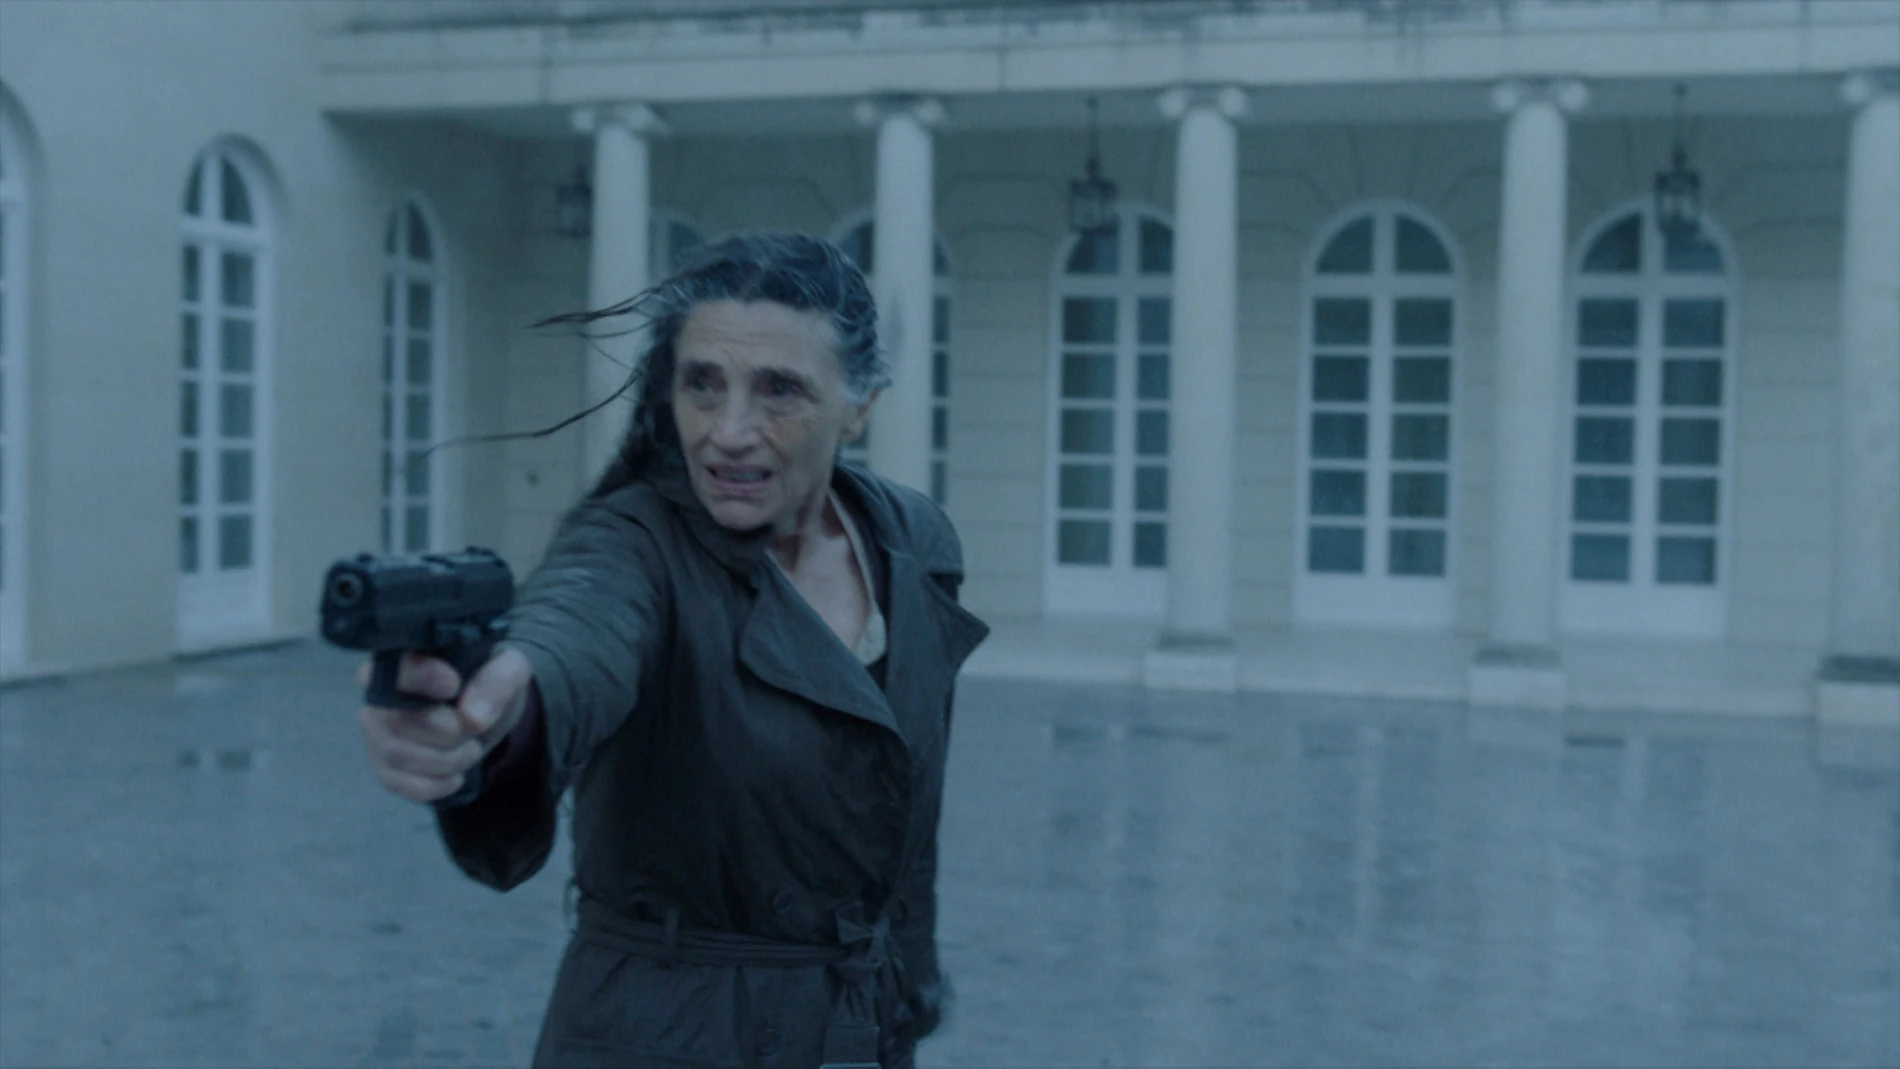 Una abuela de armas tomar: Emilia mata al presidente de España para salvar a Marta